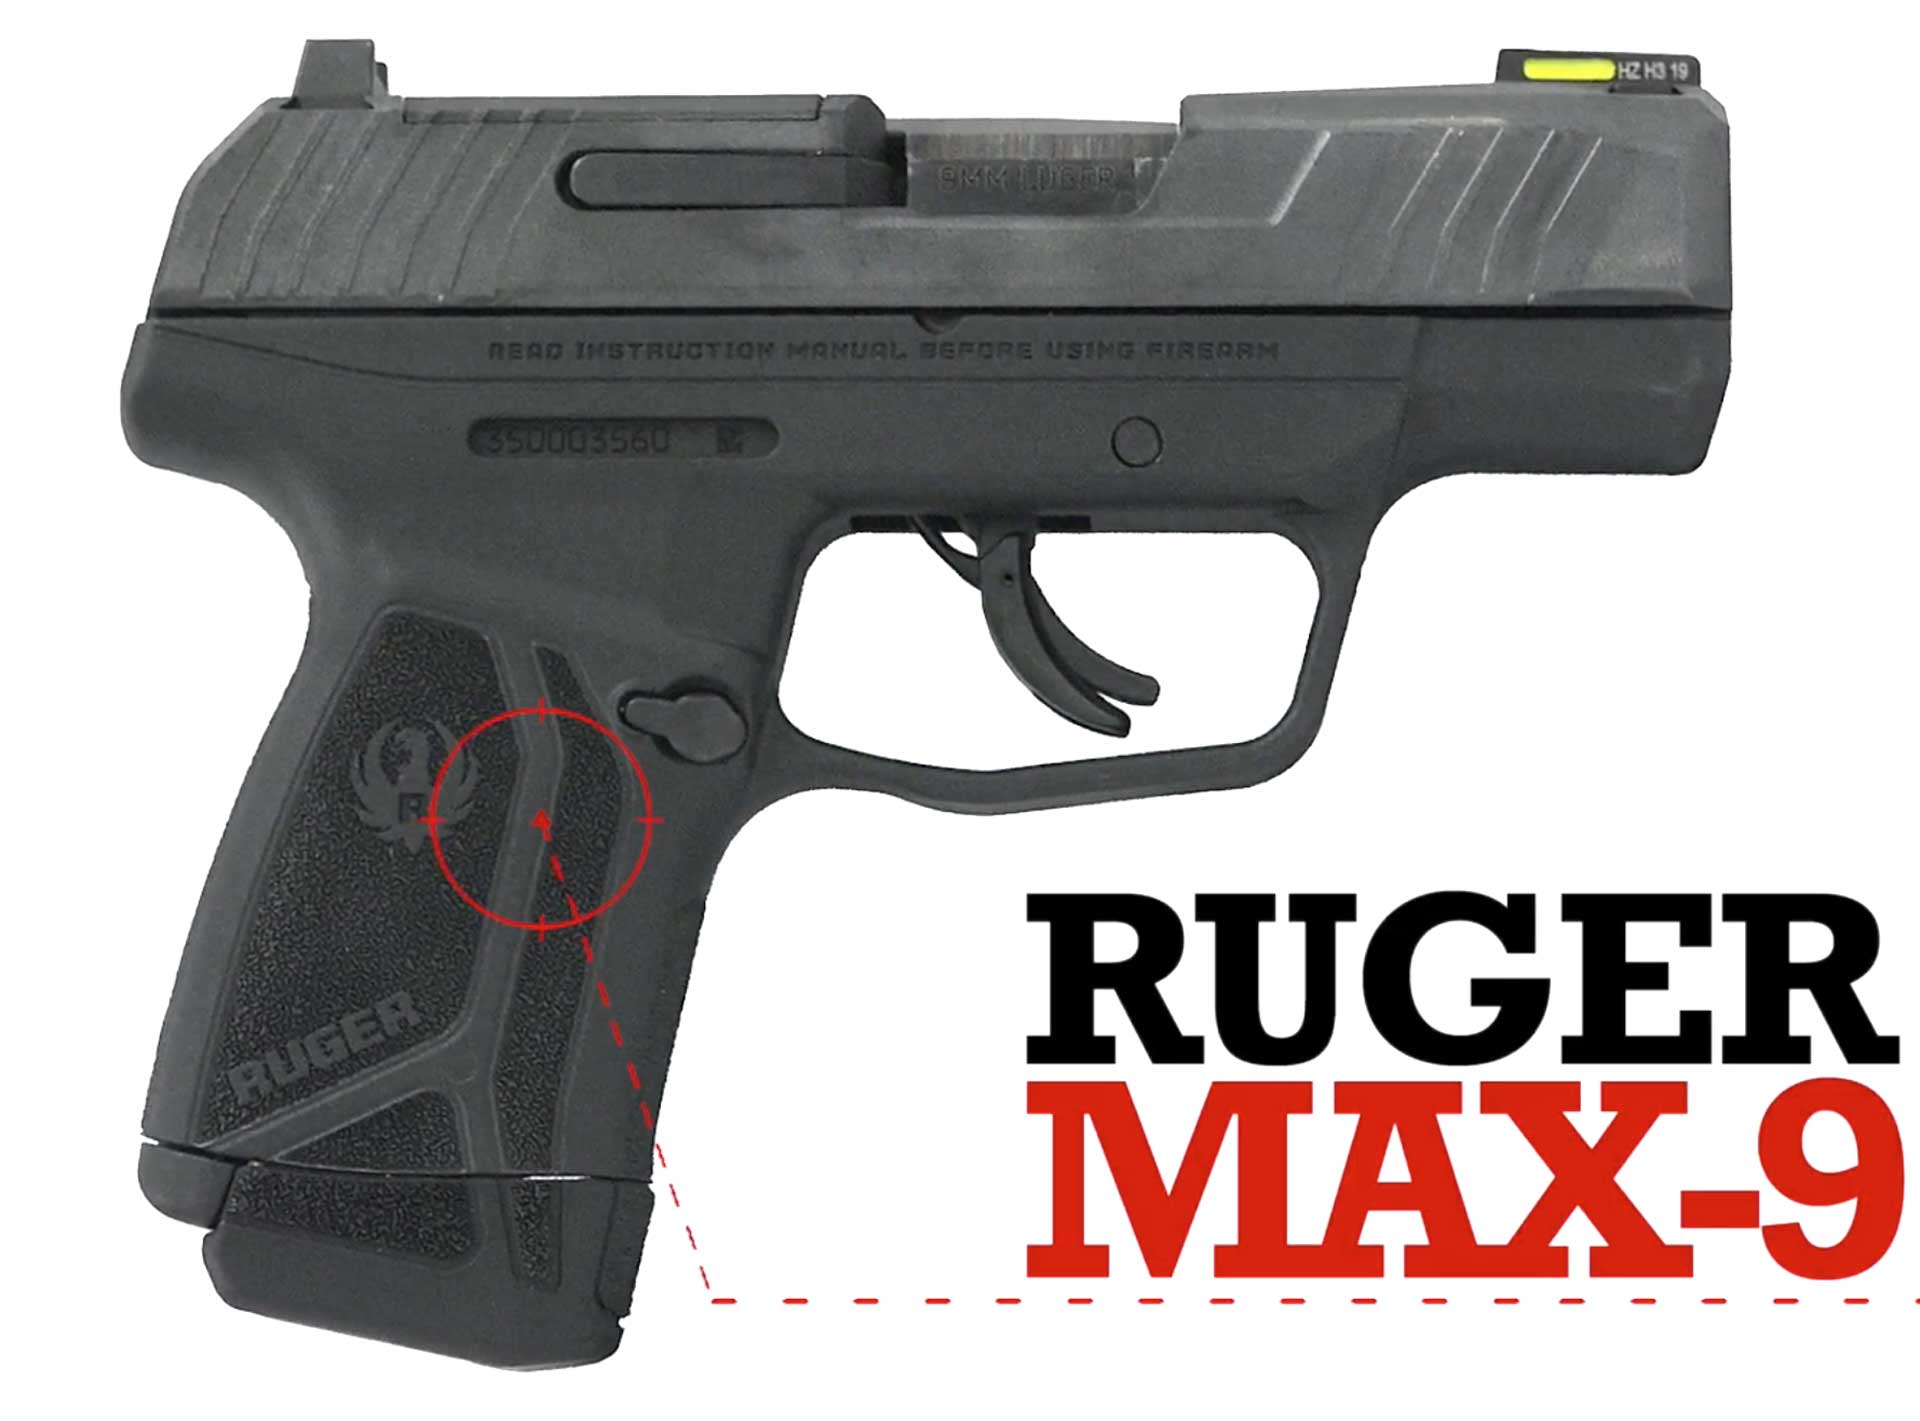 right side black gun pistol handgun plastic metal text noting make and model 